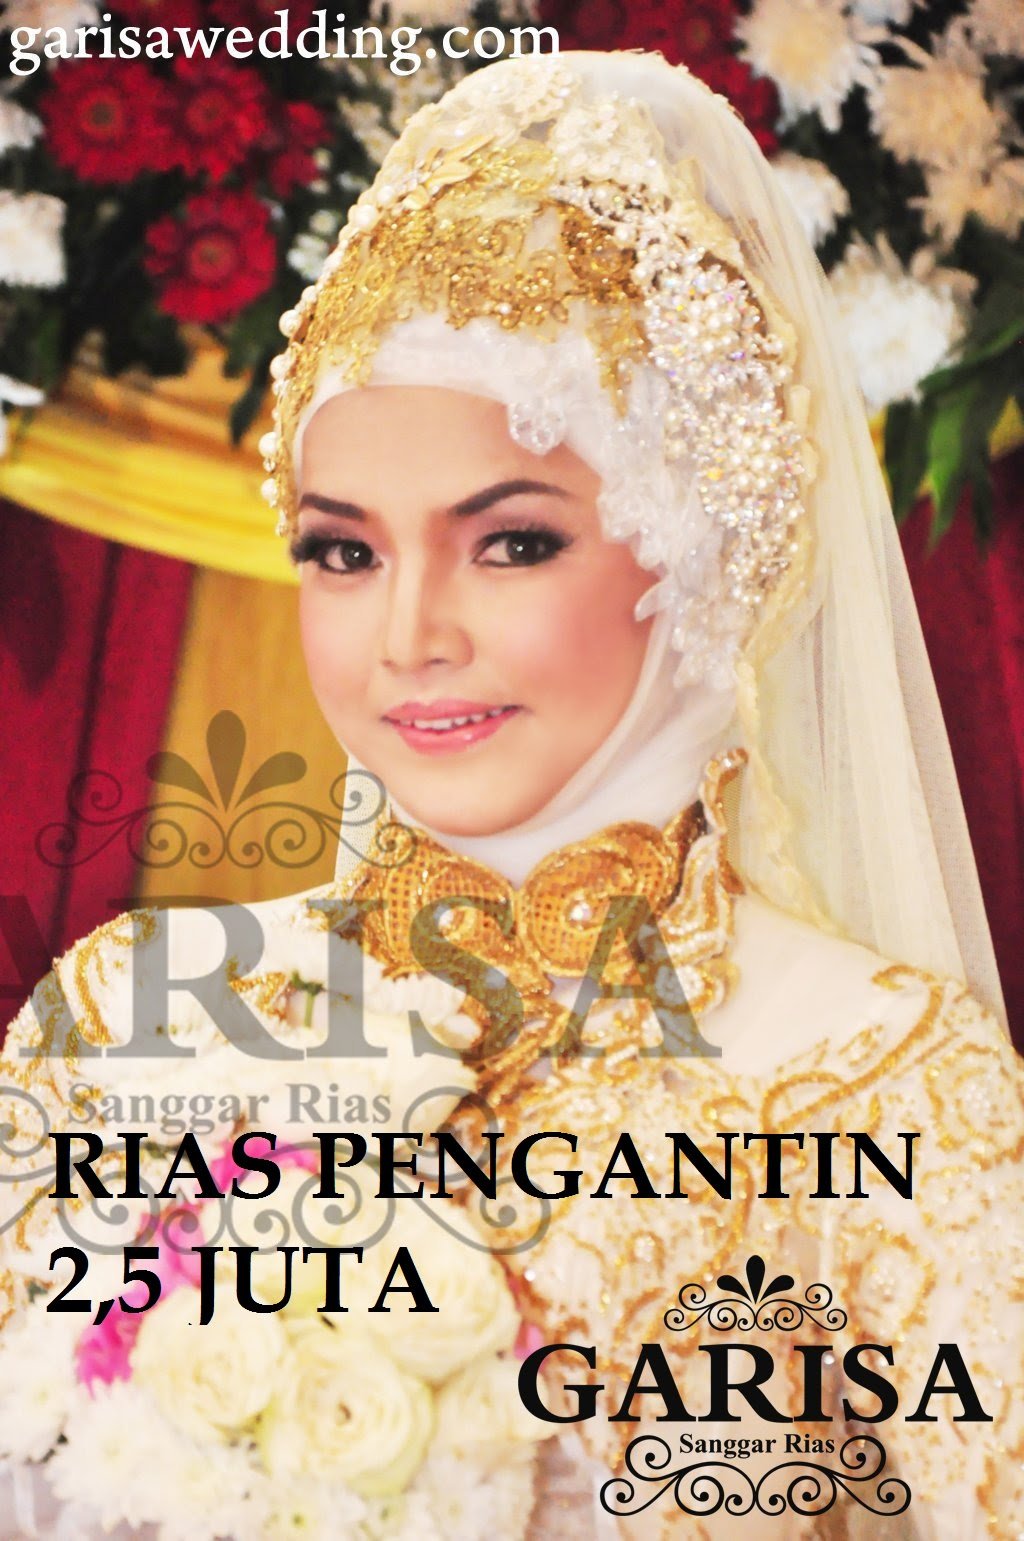 Garisa Wedding Organizer Menyediakan Paket Pernikahan, Jasa Rias Pengantin, Catering, Dekorasi prof